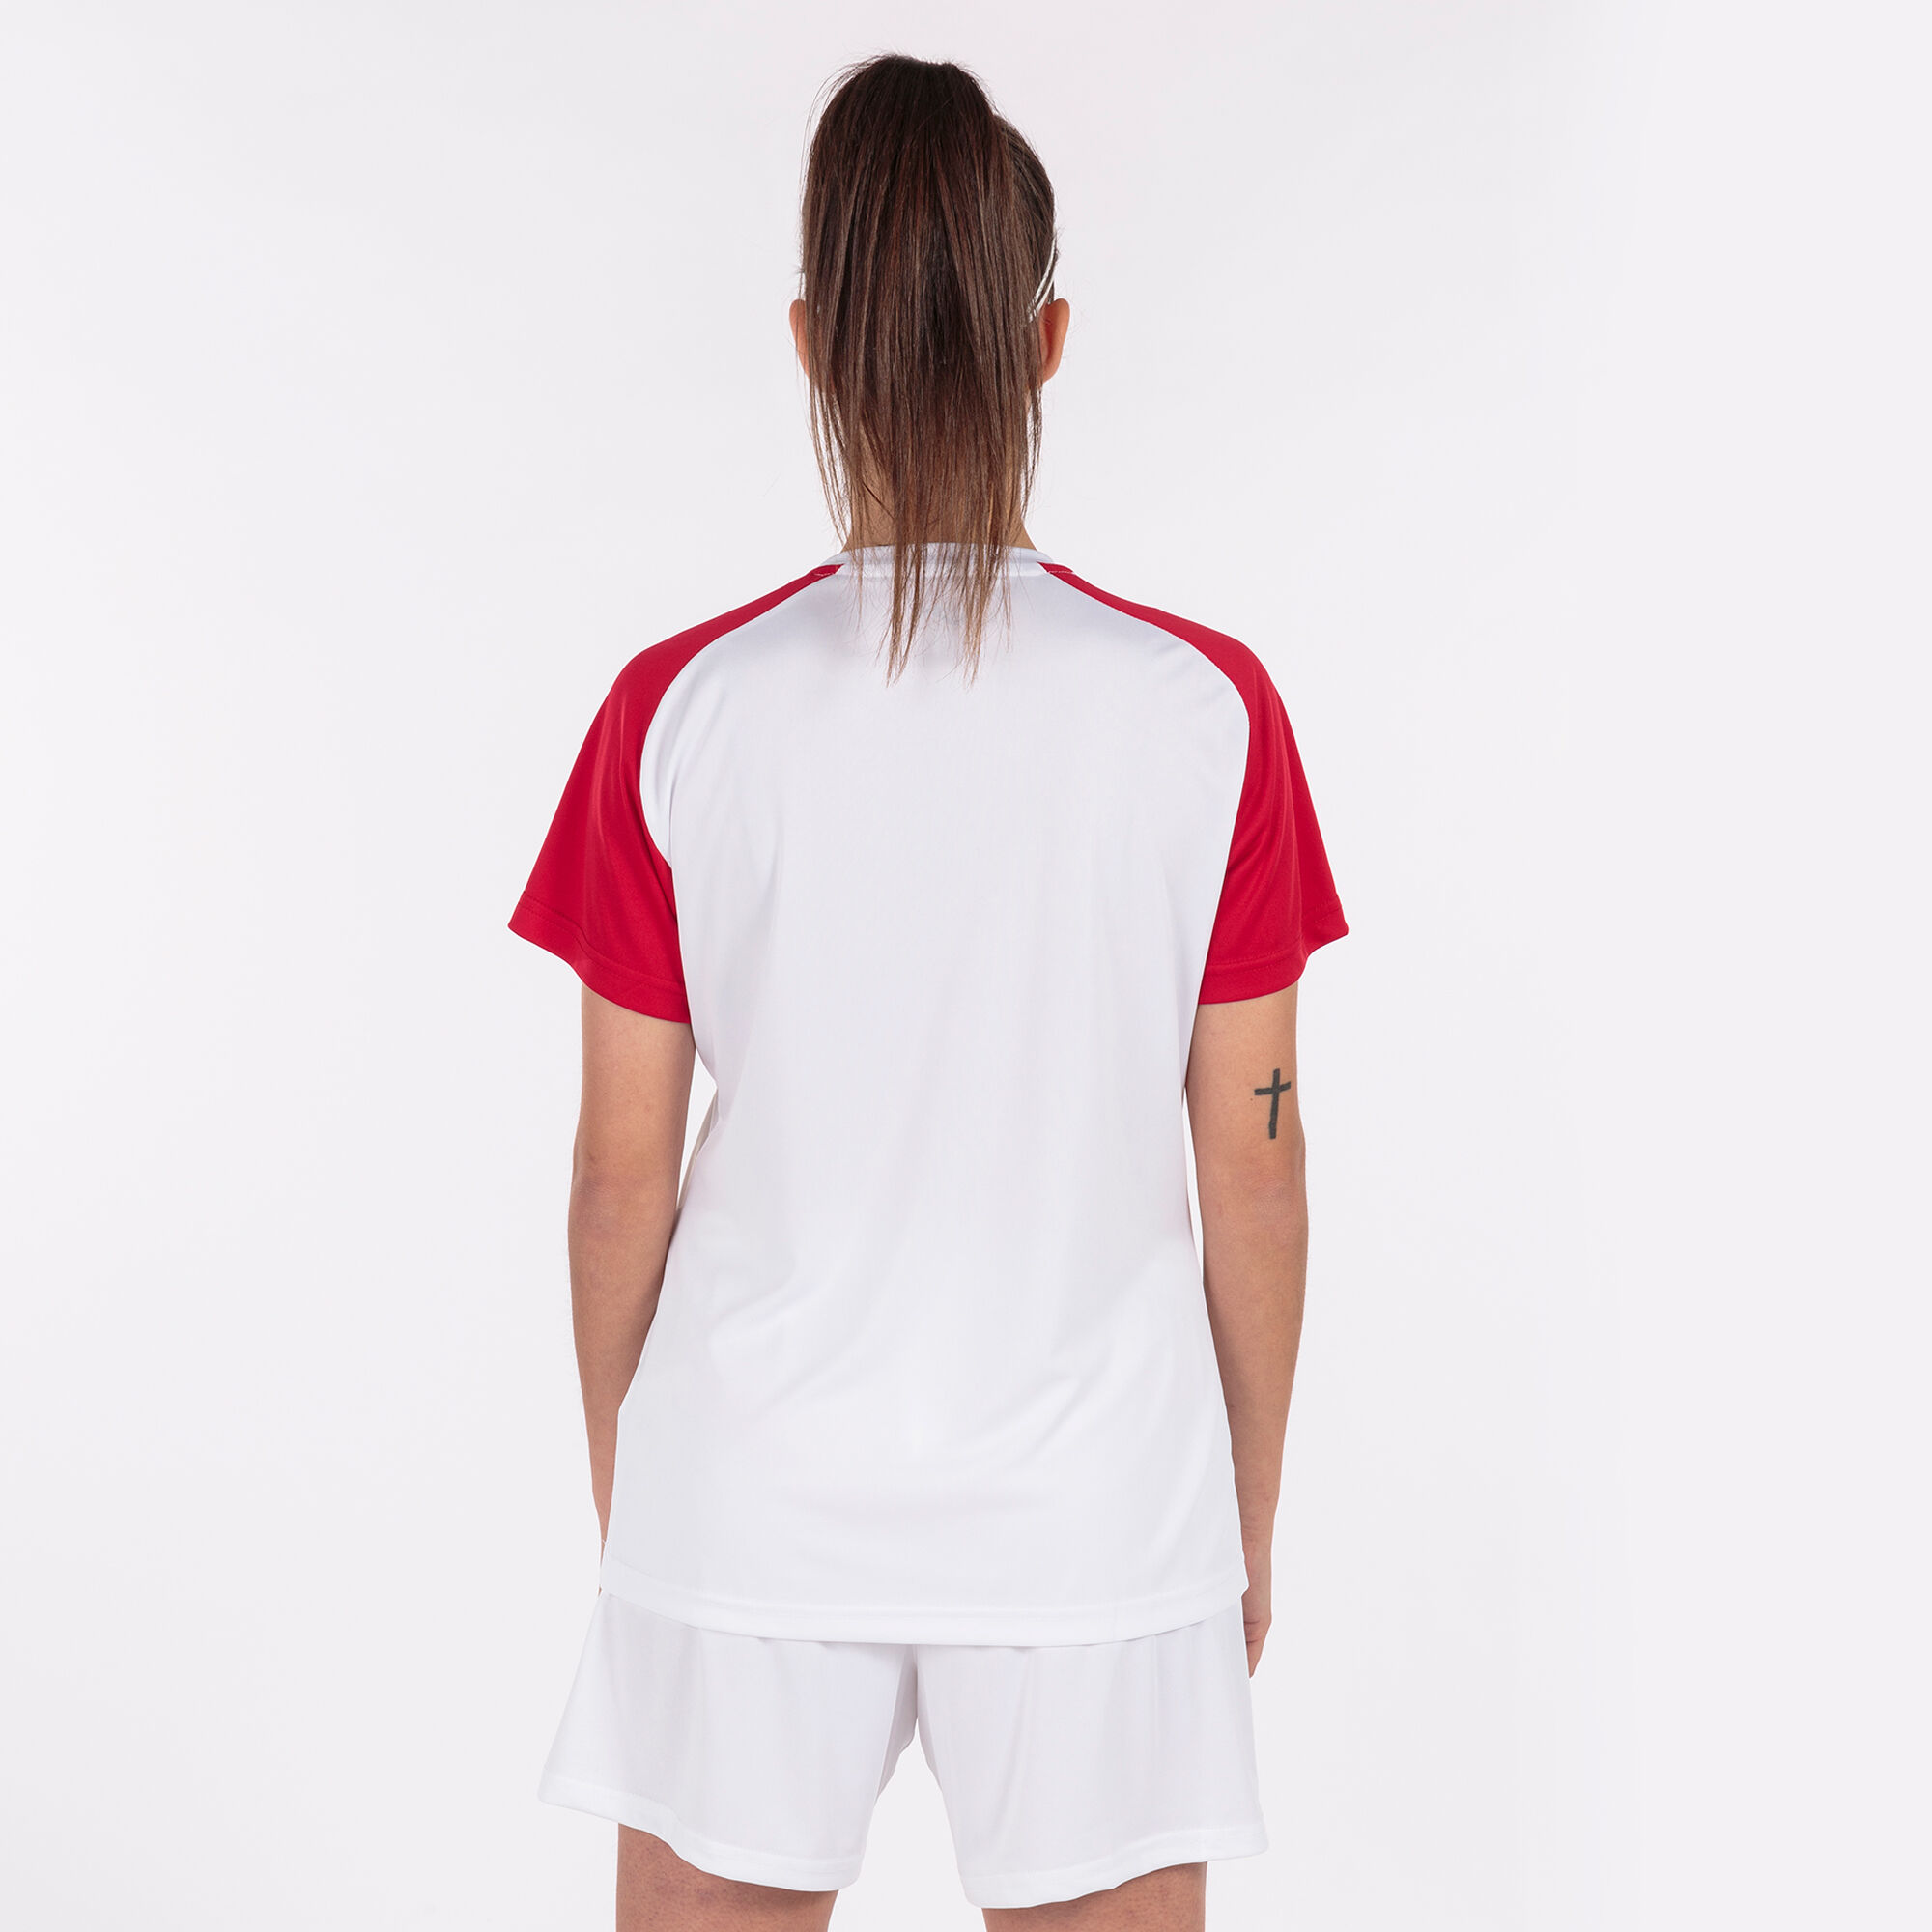 Camiseta manga corta mujer Academy IV blanco rojo